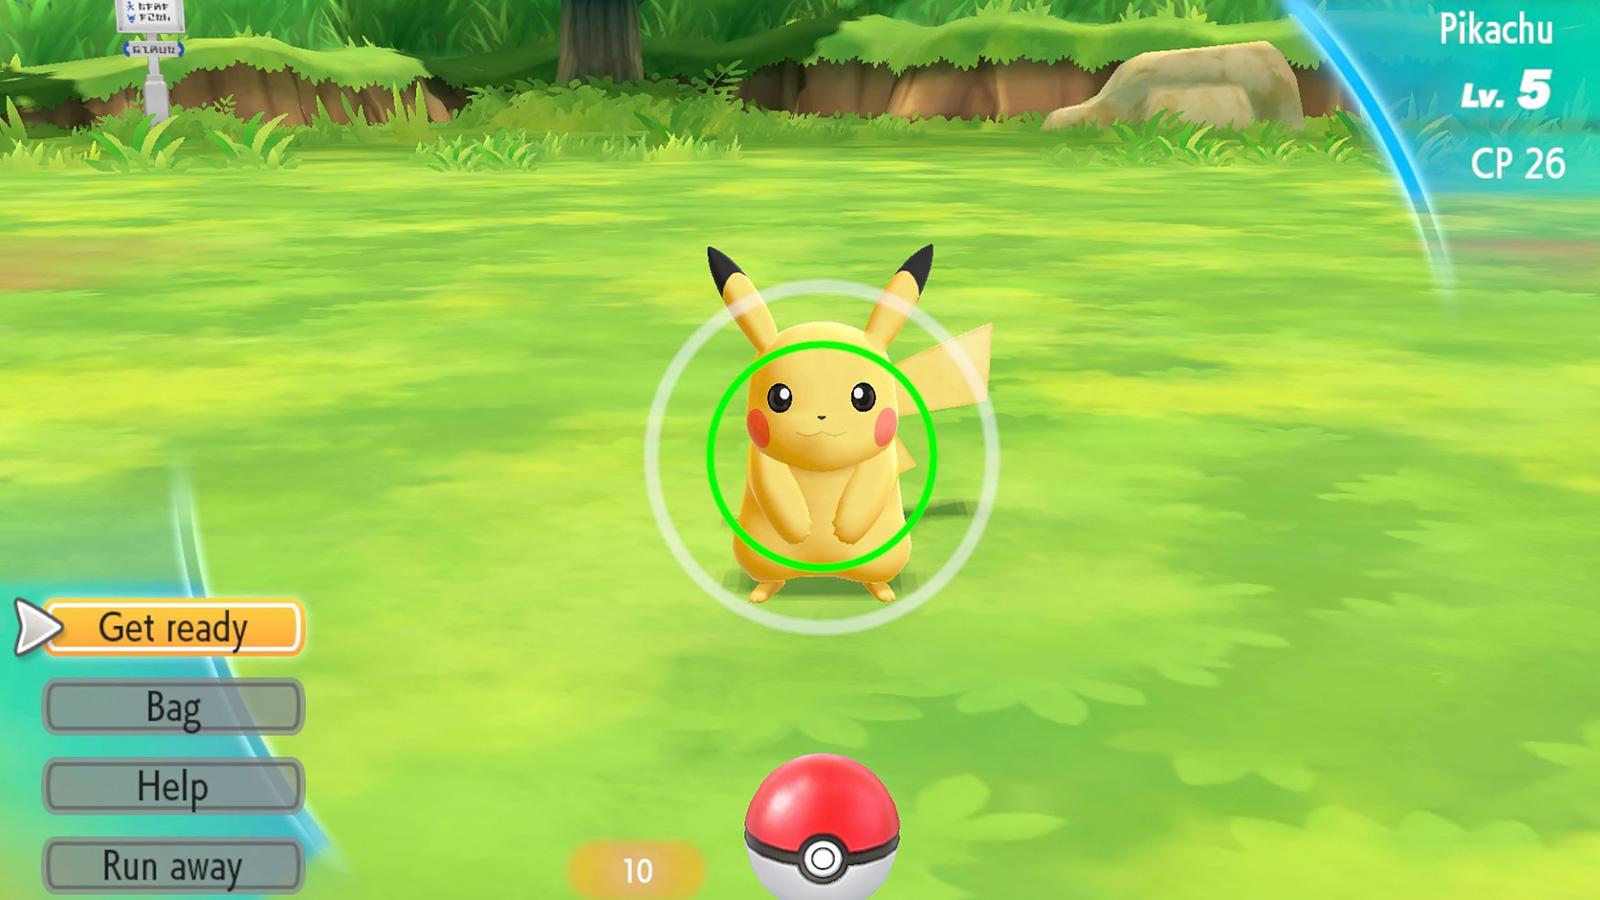 Screenshot of Pokemon Lets Go Pikachu catching mechanics.